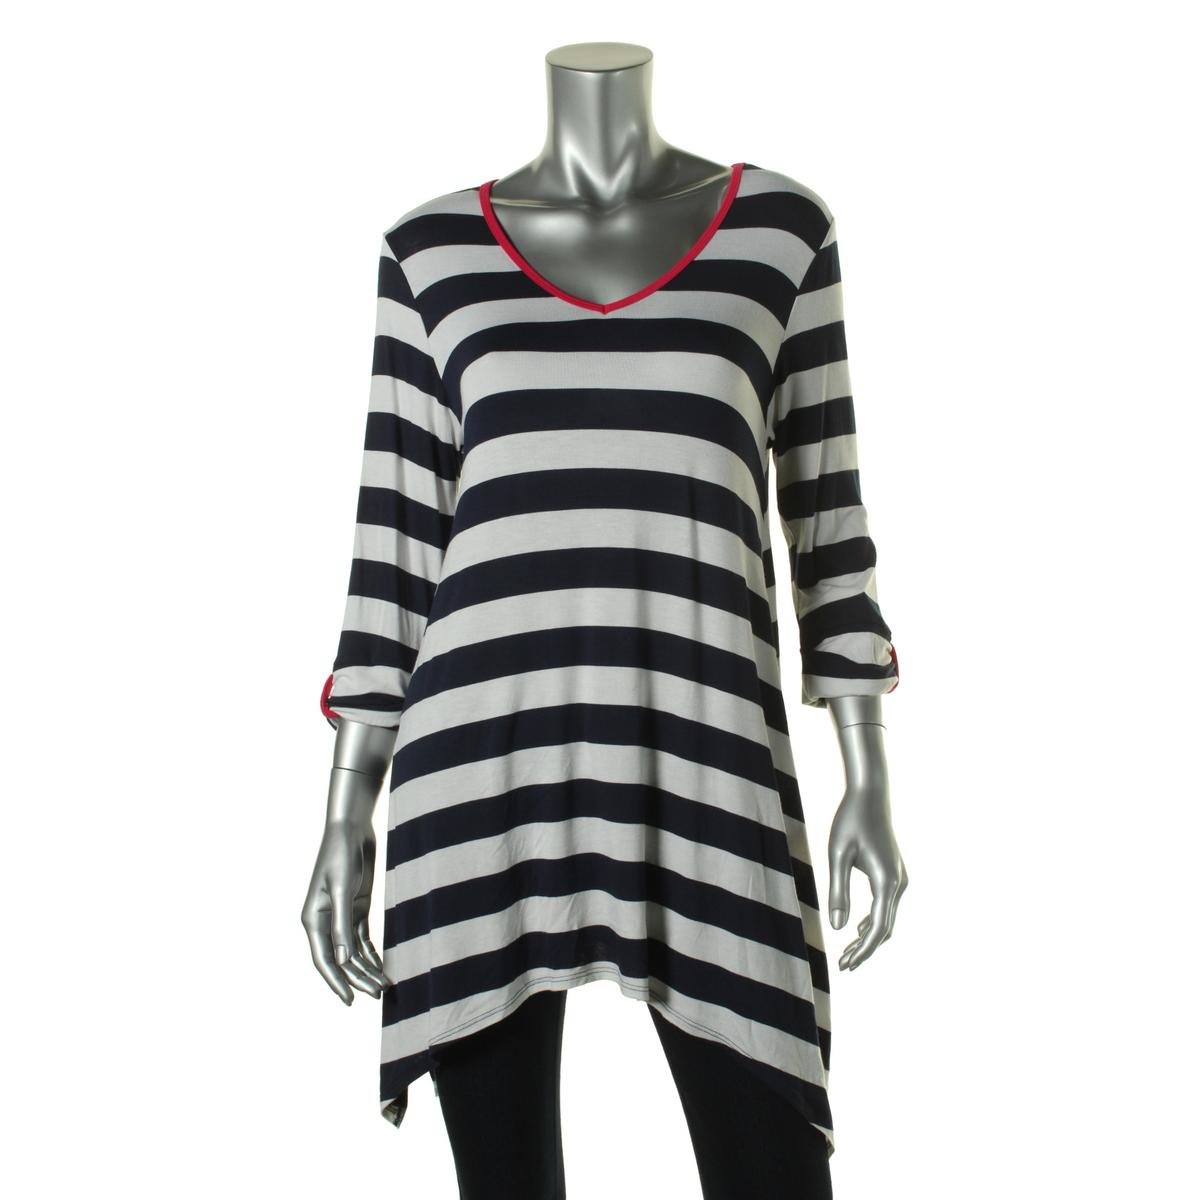 K & C 6991 Womens Asymmetric Striped 3/4 Sleeves Tunic Top Shirt BHFO